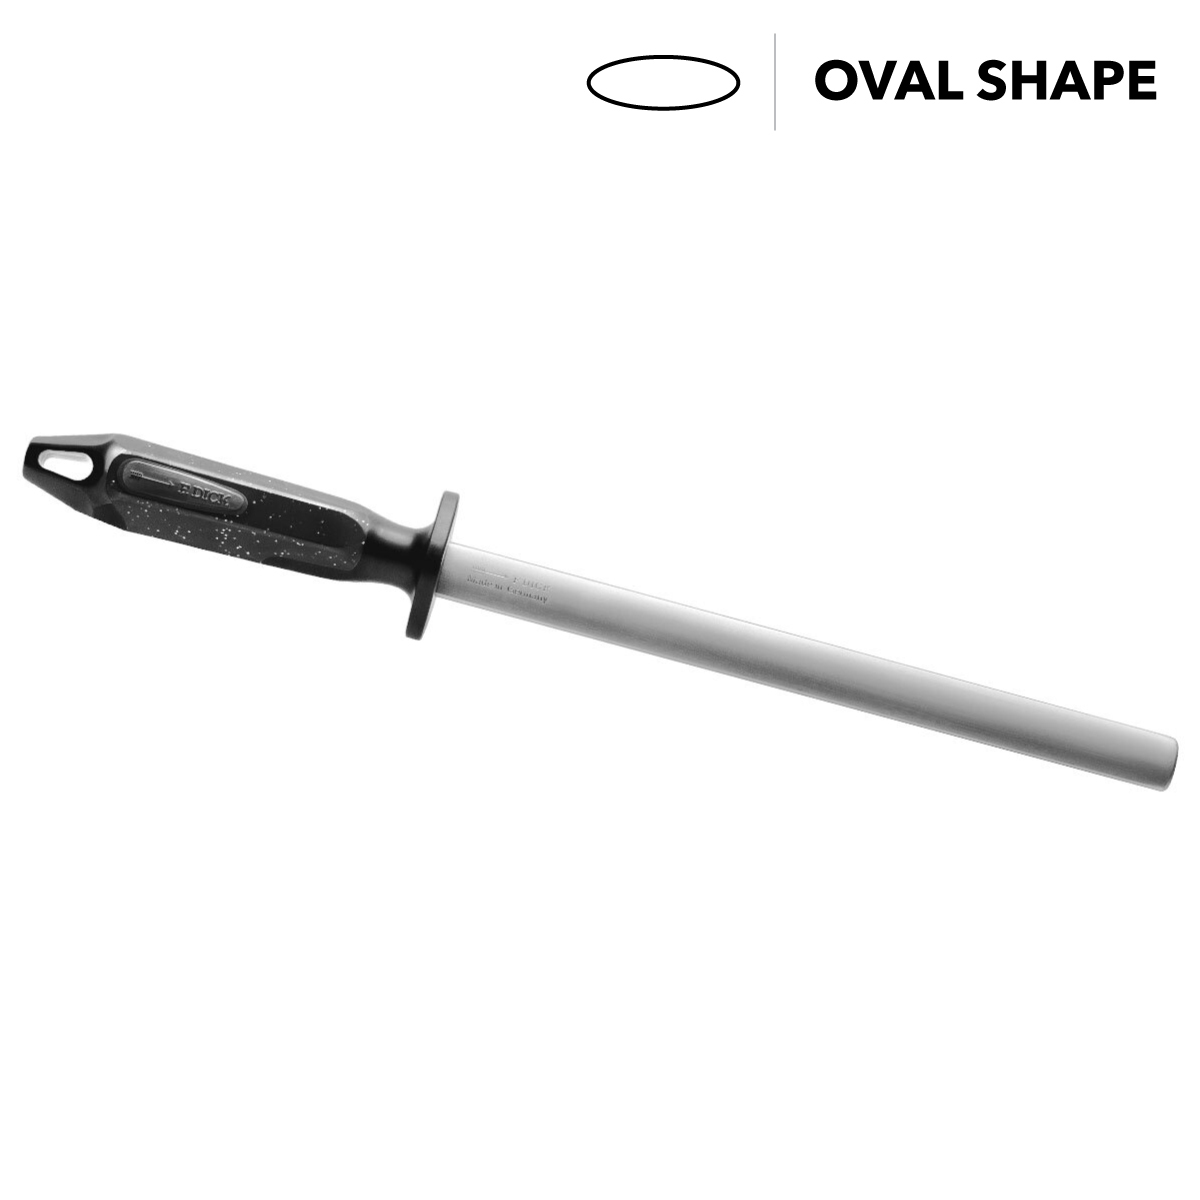 Simón long oval diamond sharpening steel with fiber handle